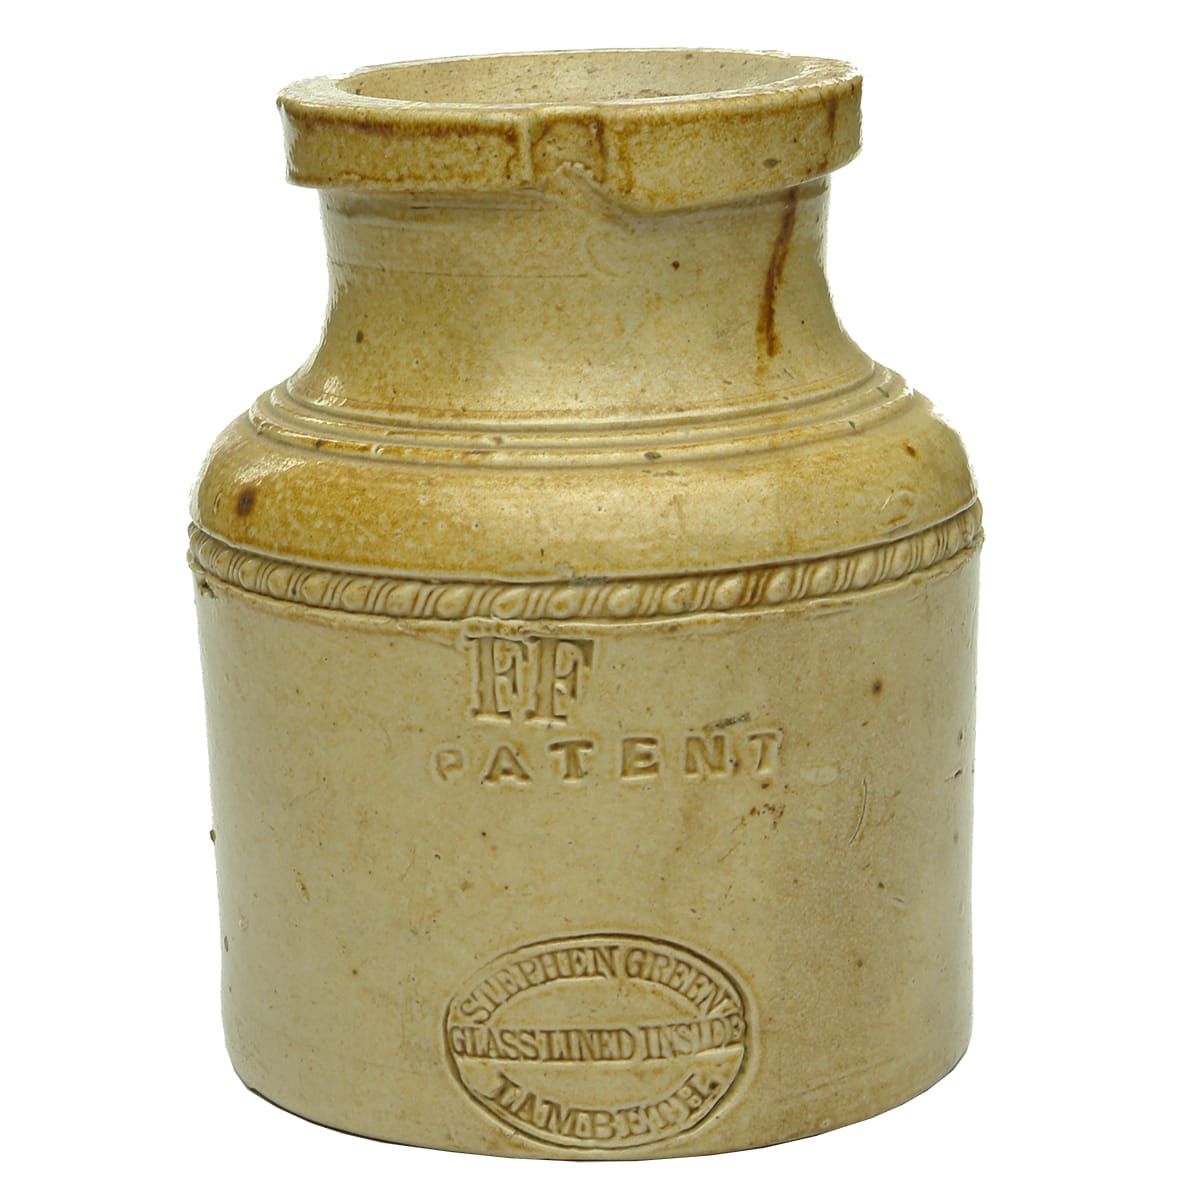 Jar. Stephen Green, FF Patent. Salt Glaze. 1 Pound.